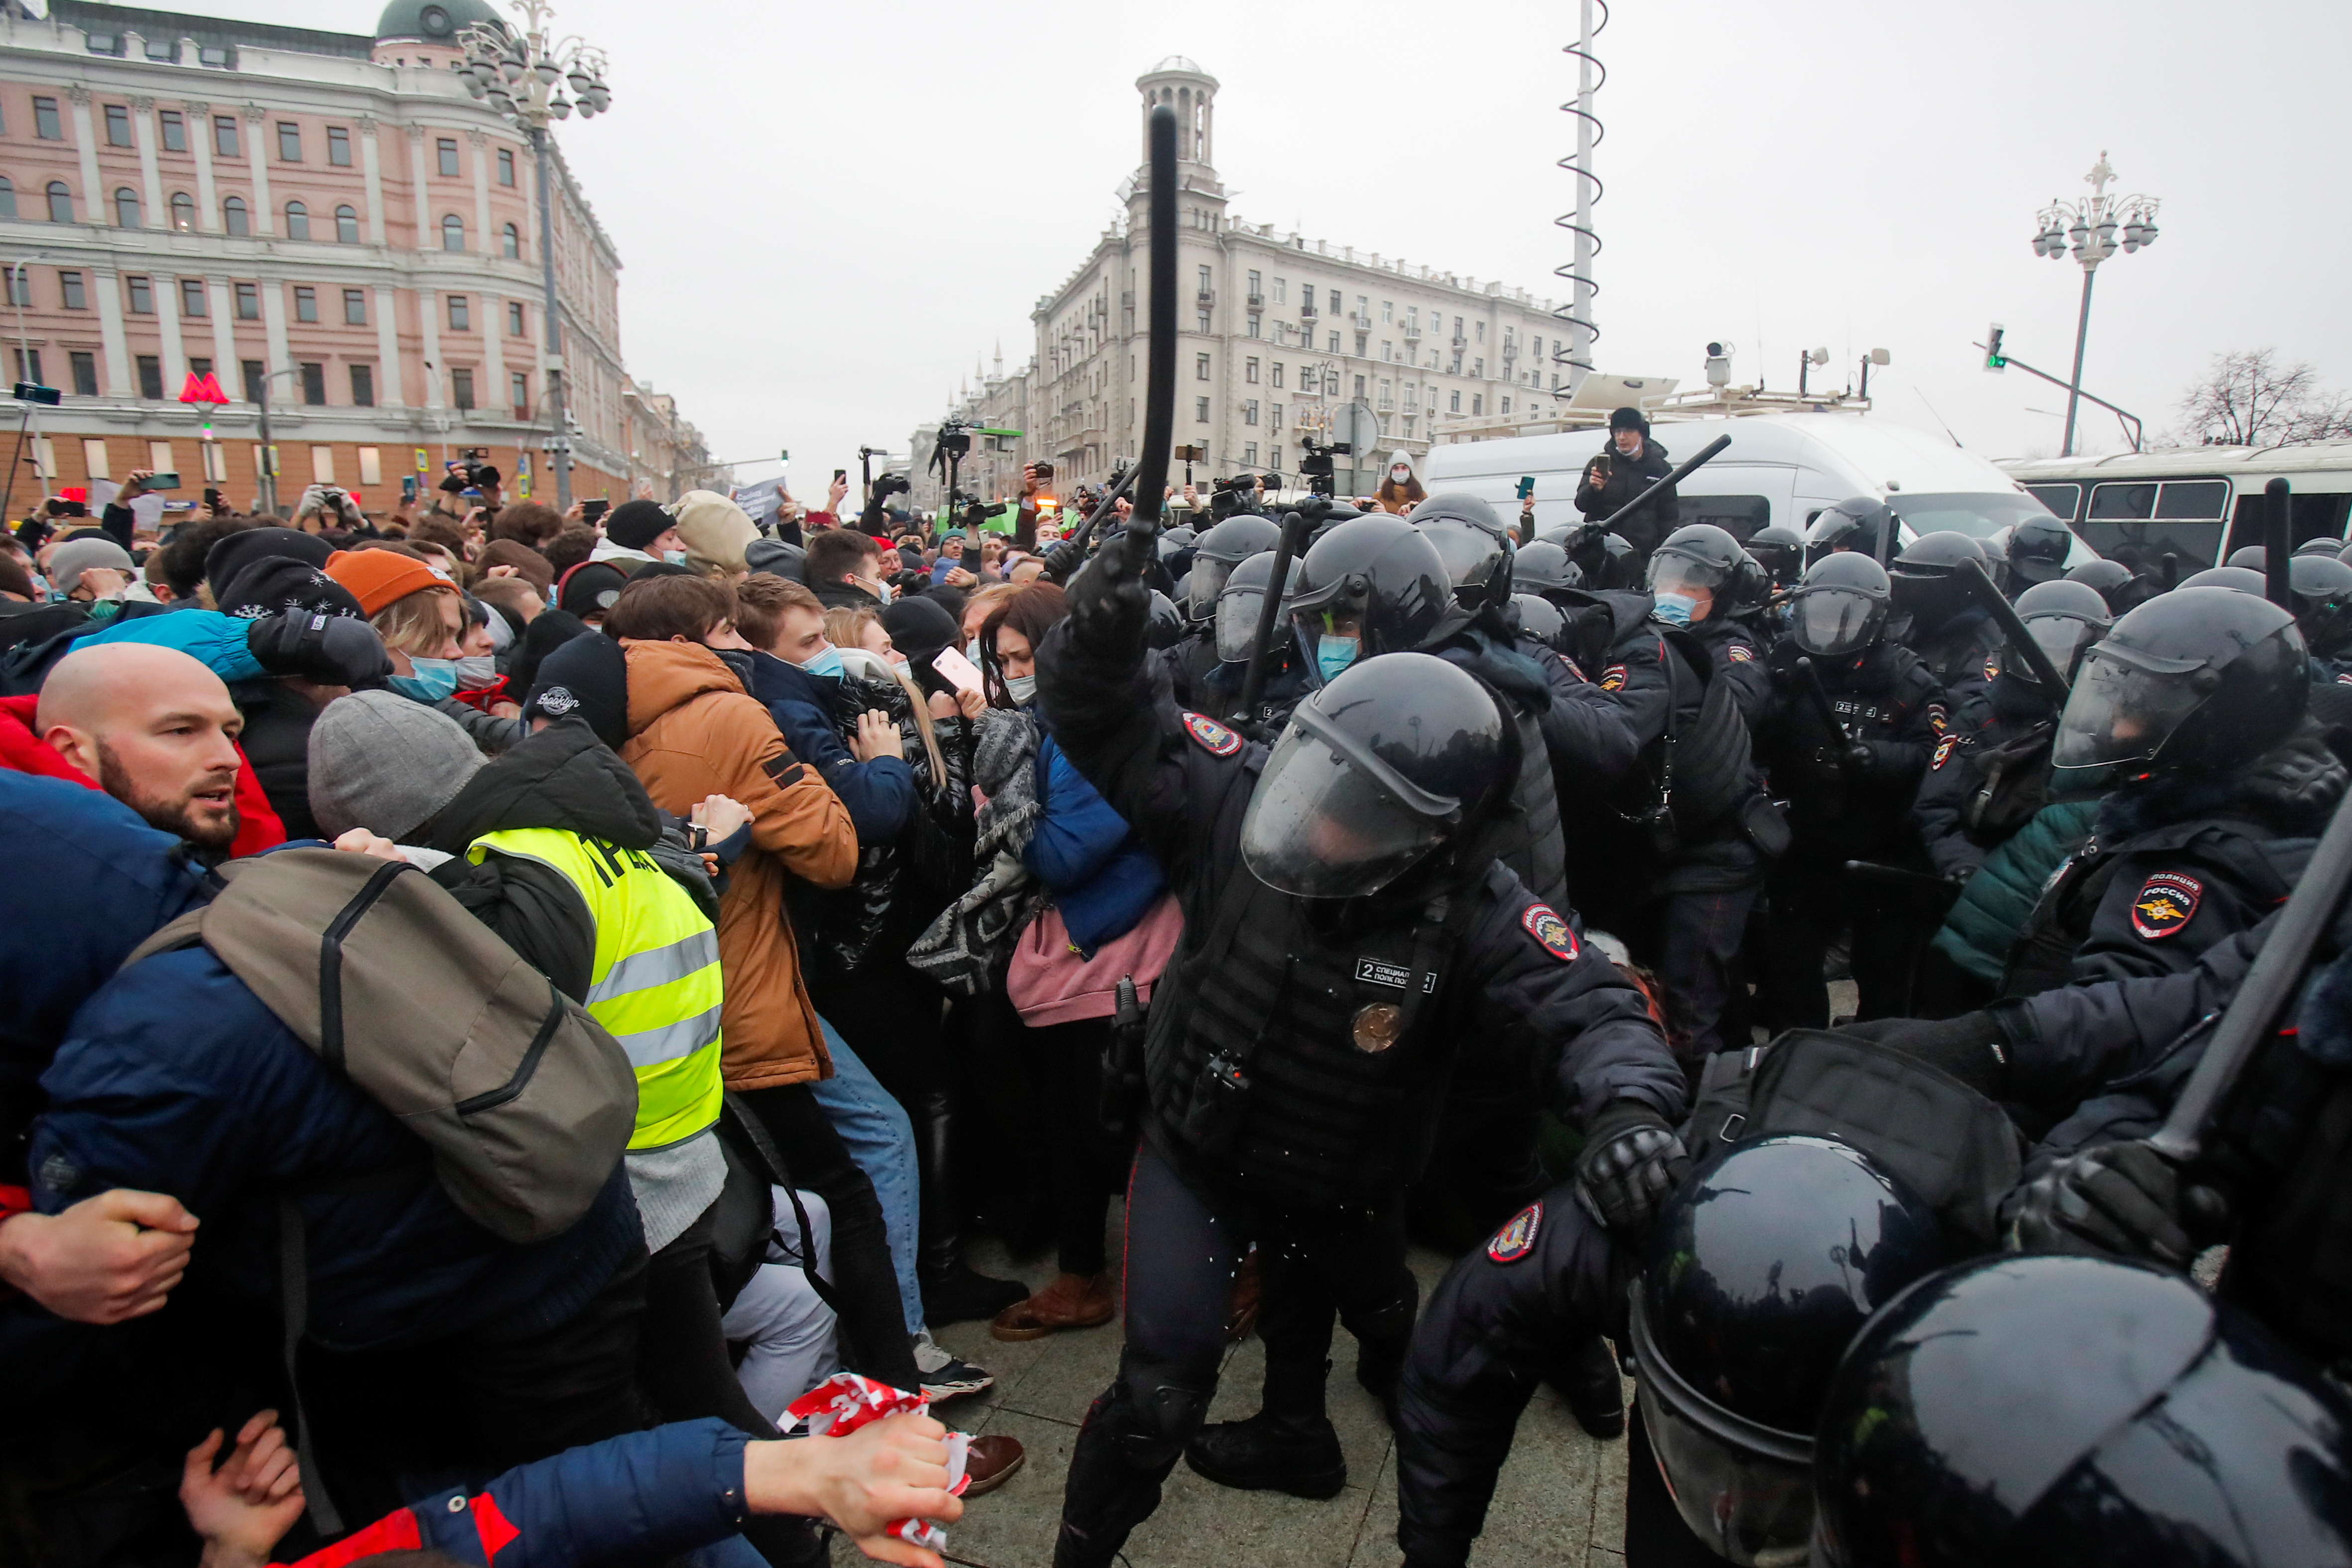 2021-01-23T173745Z_870176251_RC2TDL9PURJF_RTRMADP_3_RUSSIA-POLITICS-NAVALNY-PROTESTS